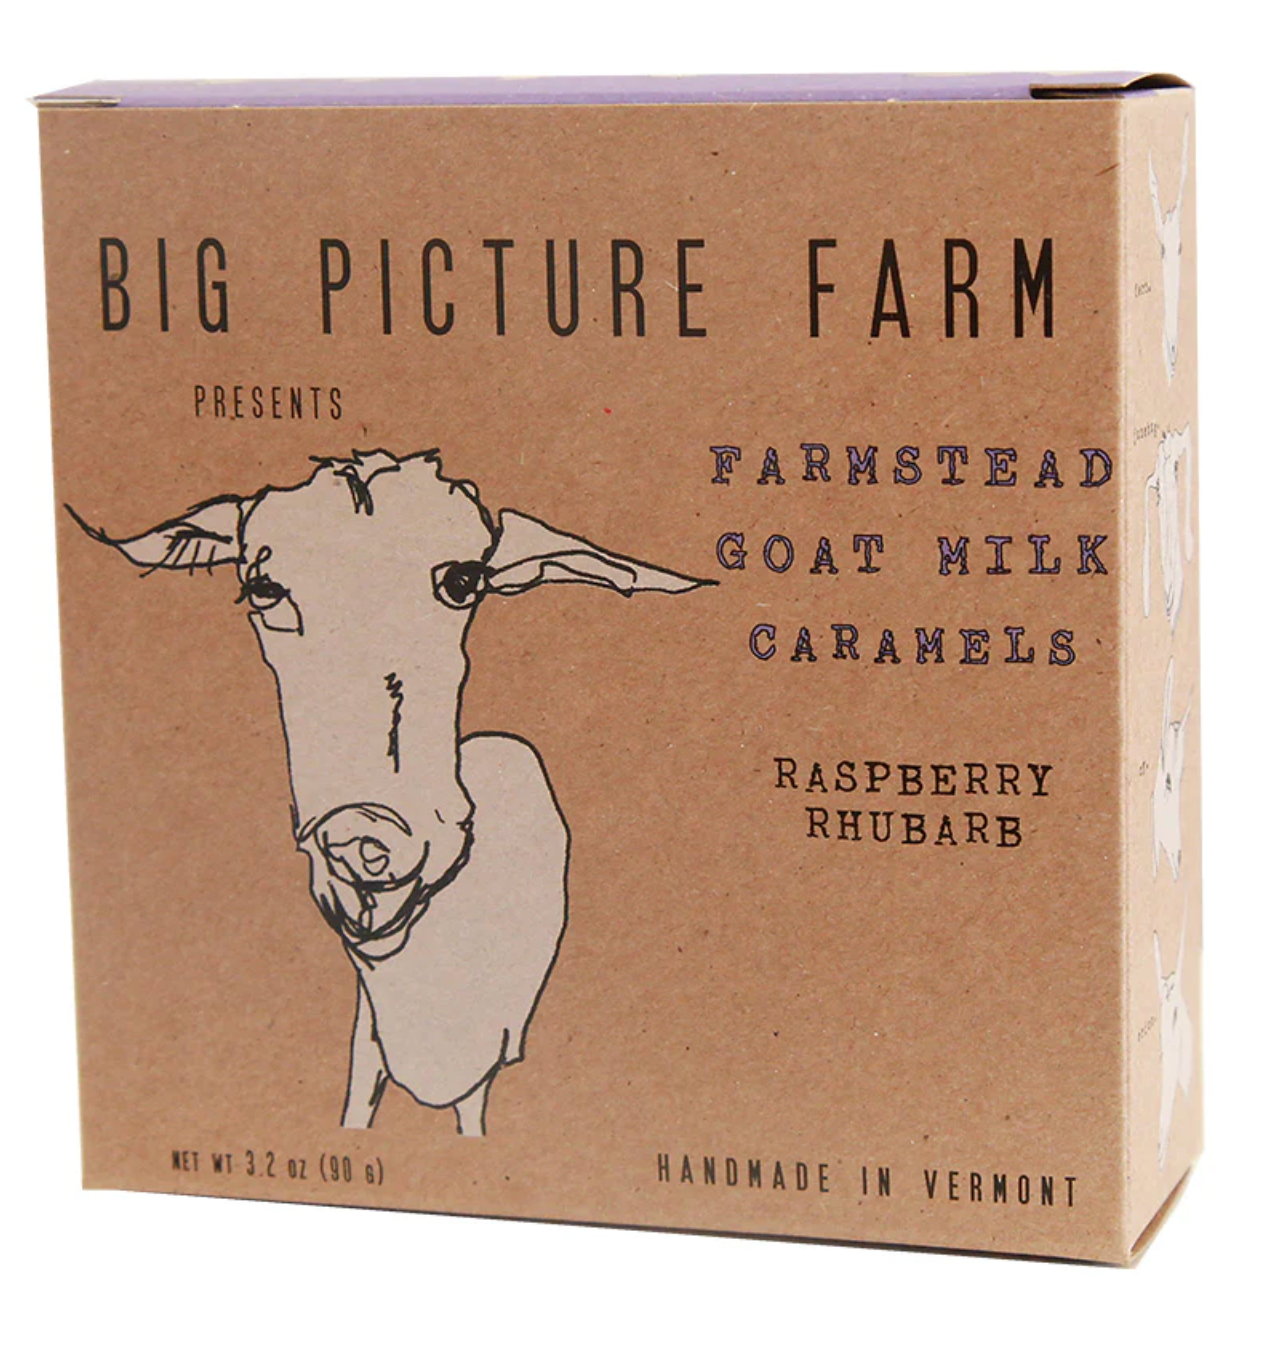 Big Picture Farm Goat Milk Caramel Vanilla - Small Box